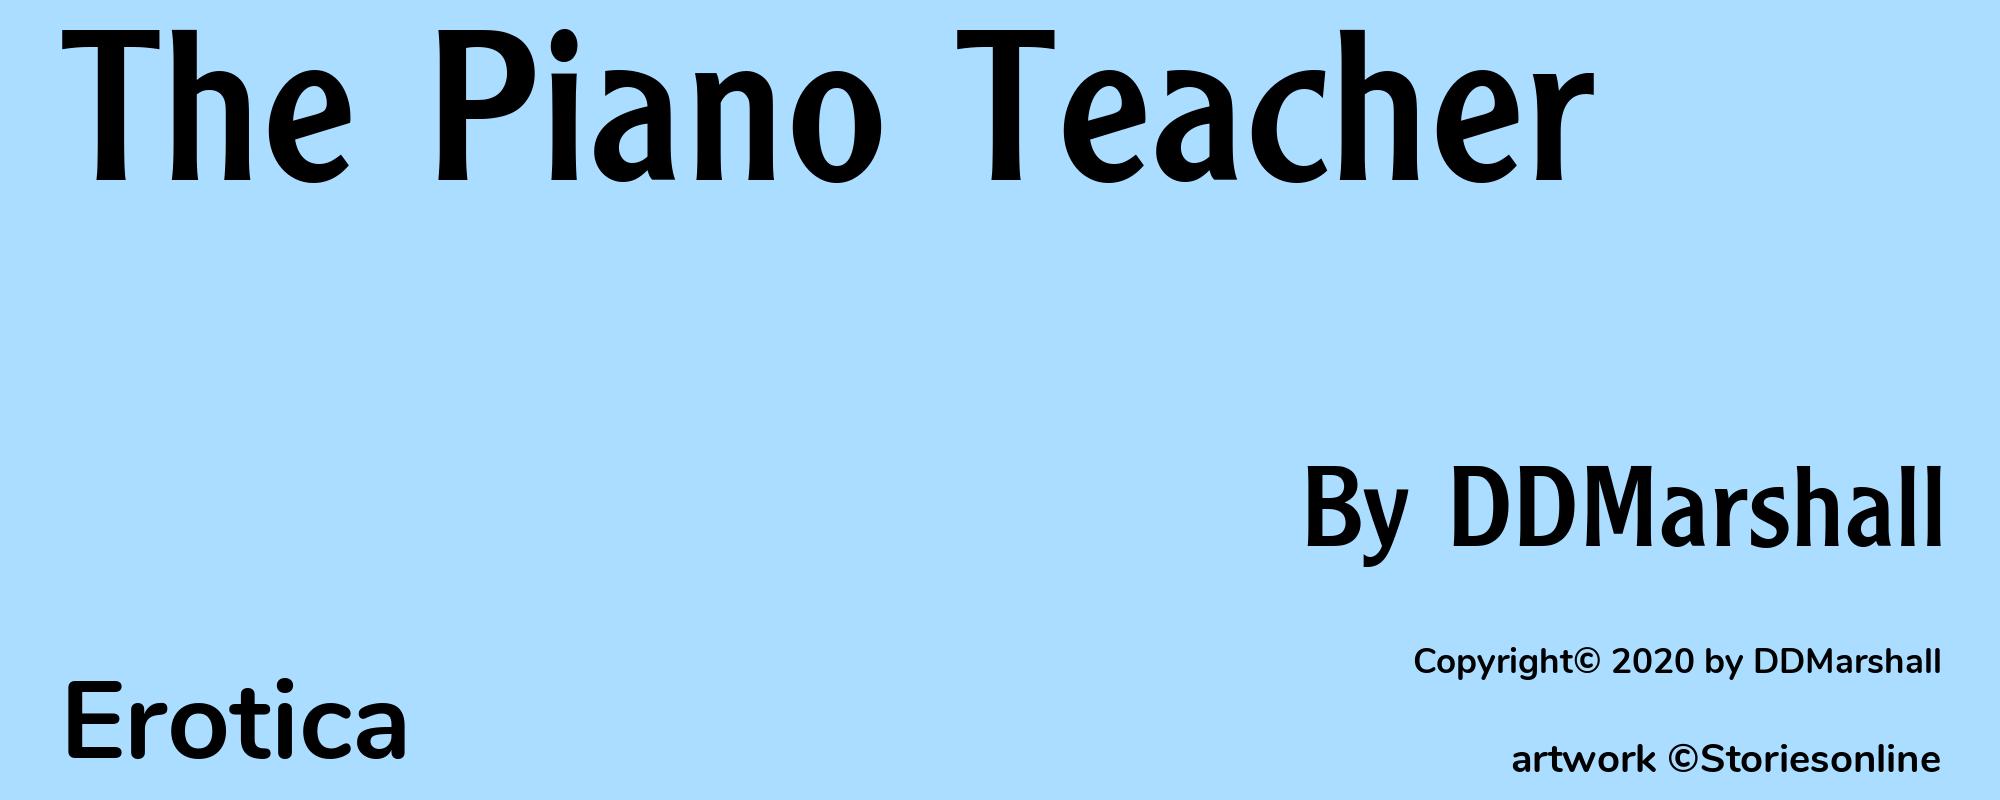 The Piano Teacher - Cover